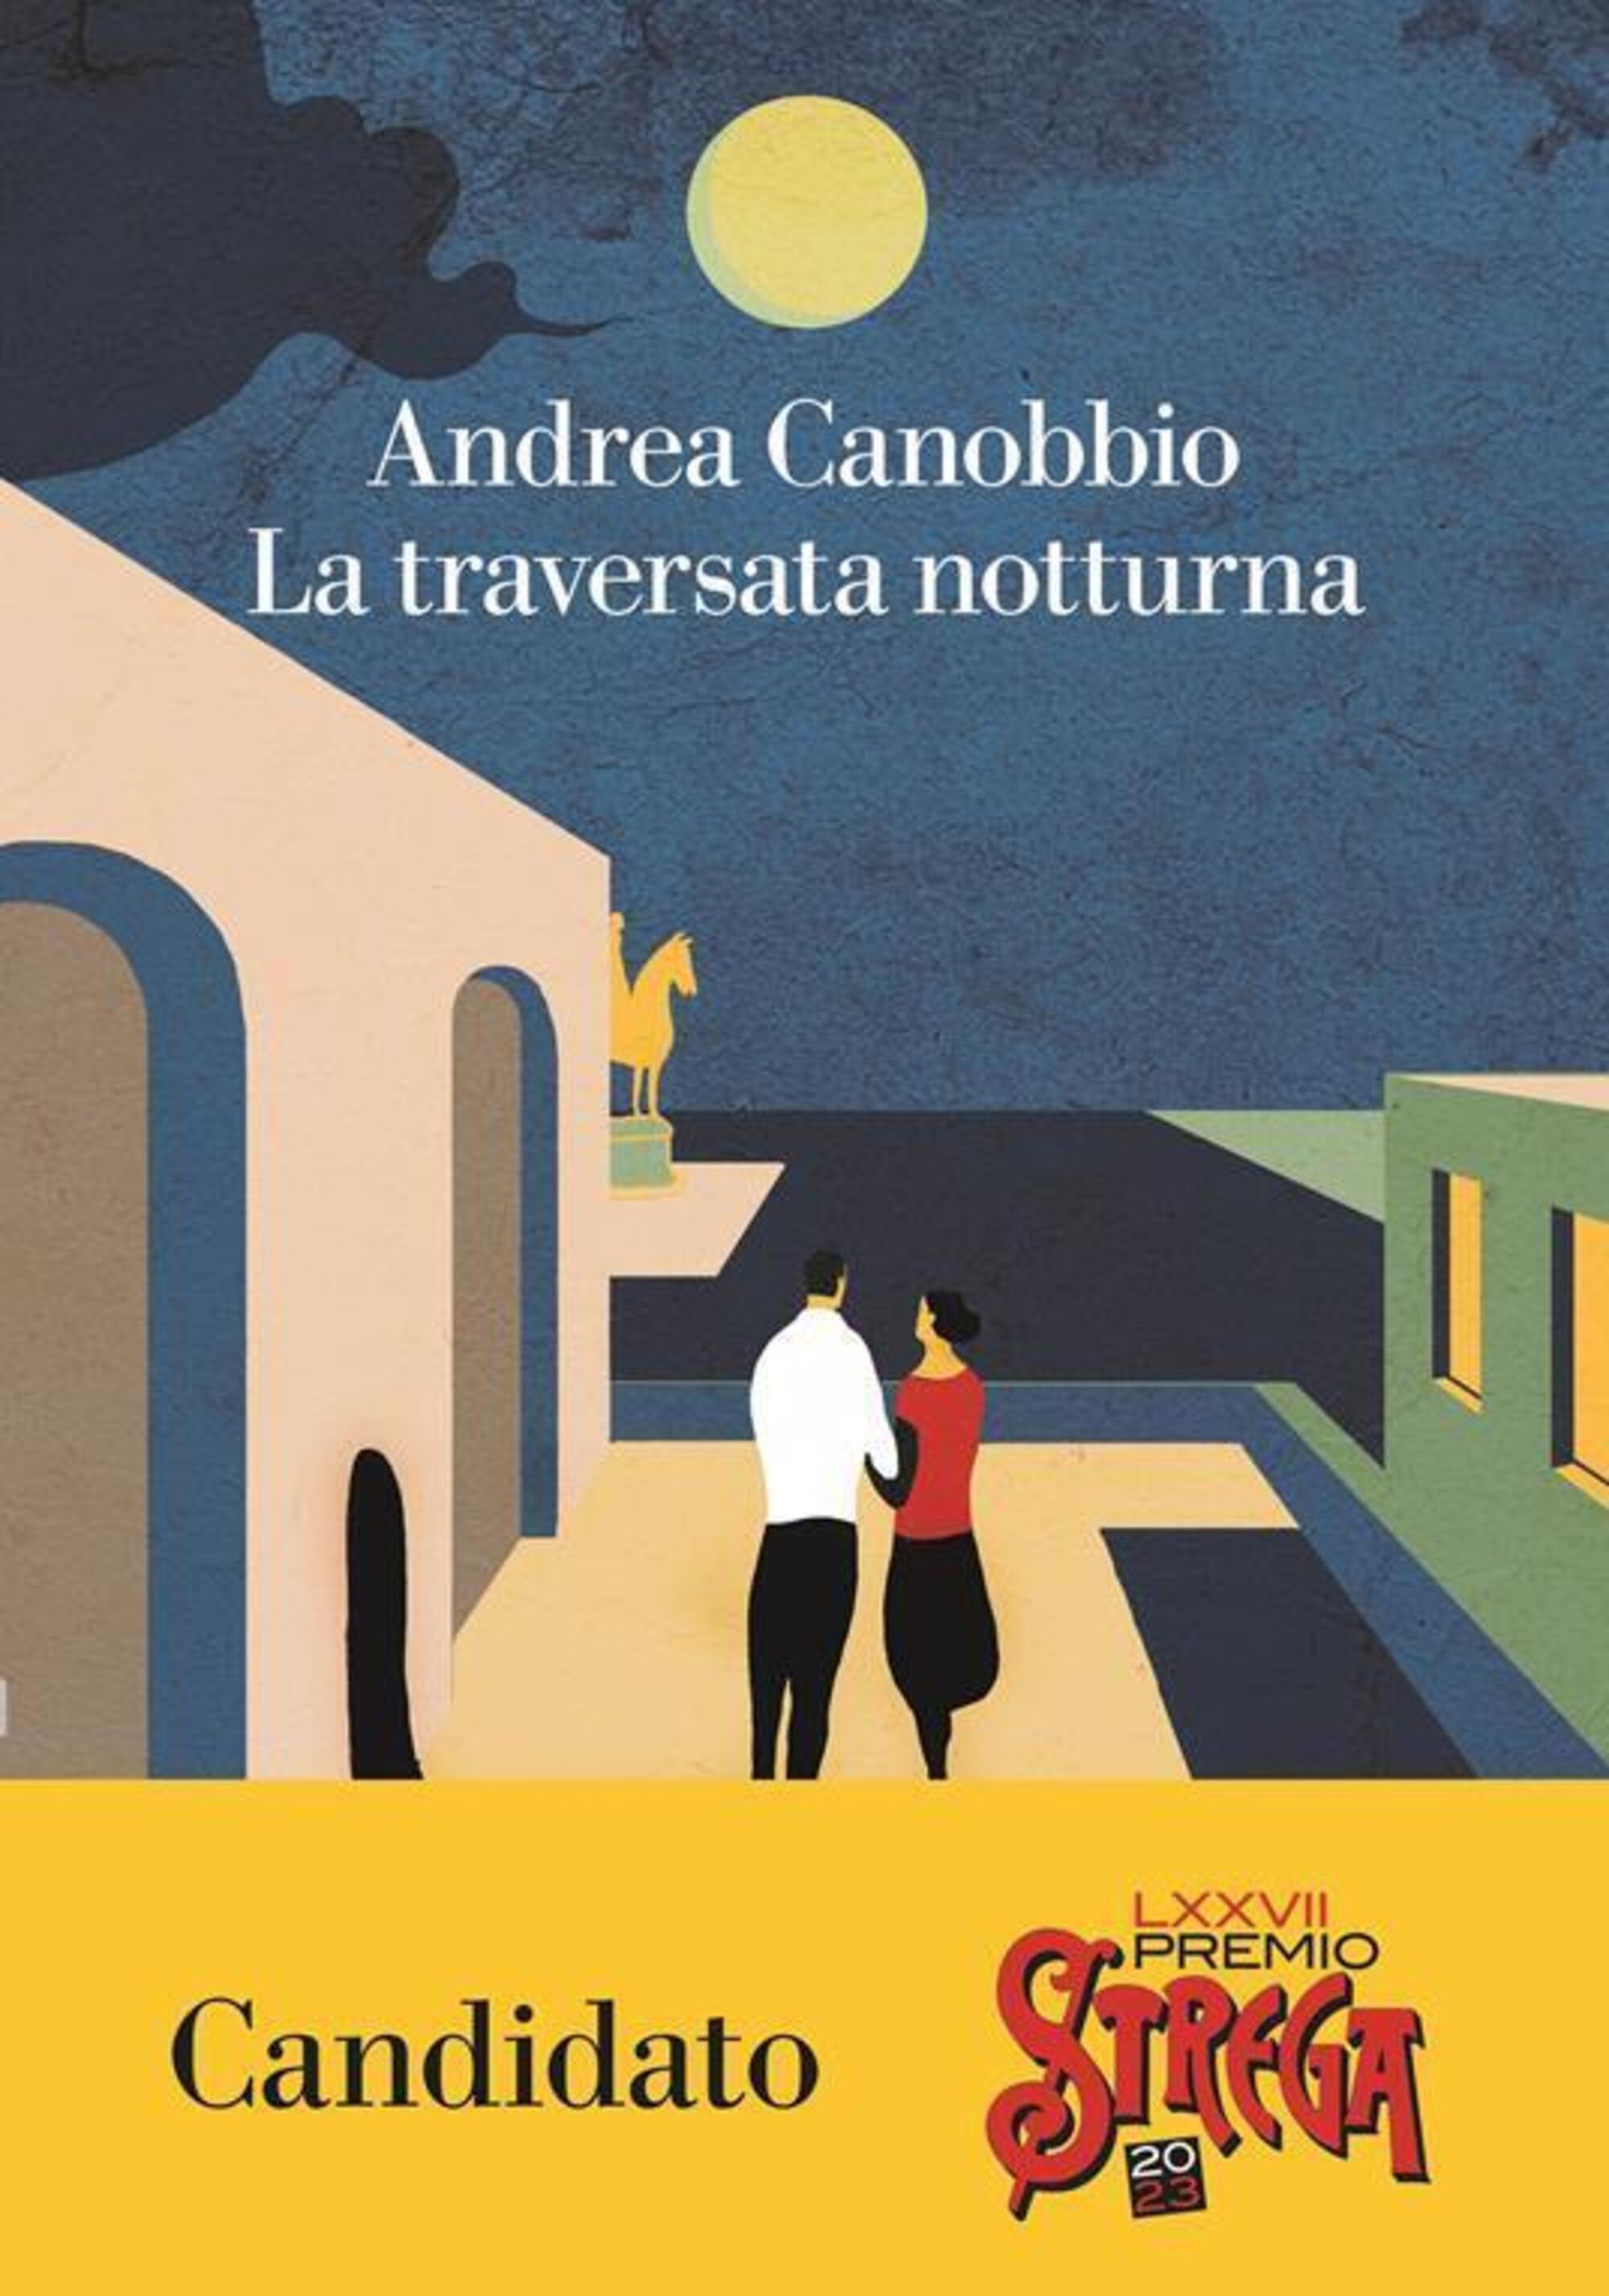 La traversata notturna, Andrea Canobbio